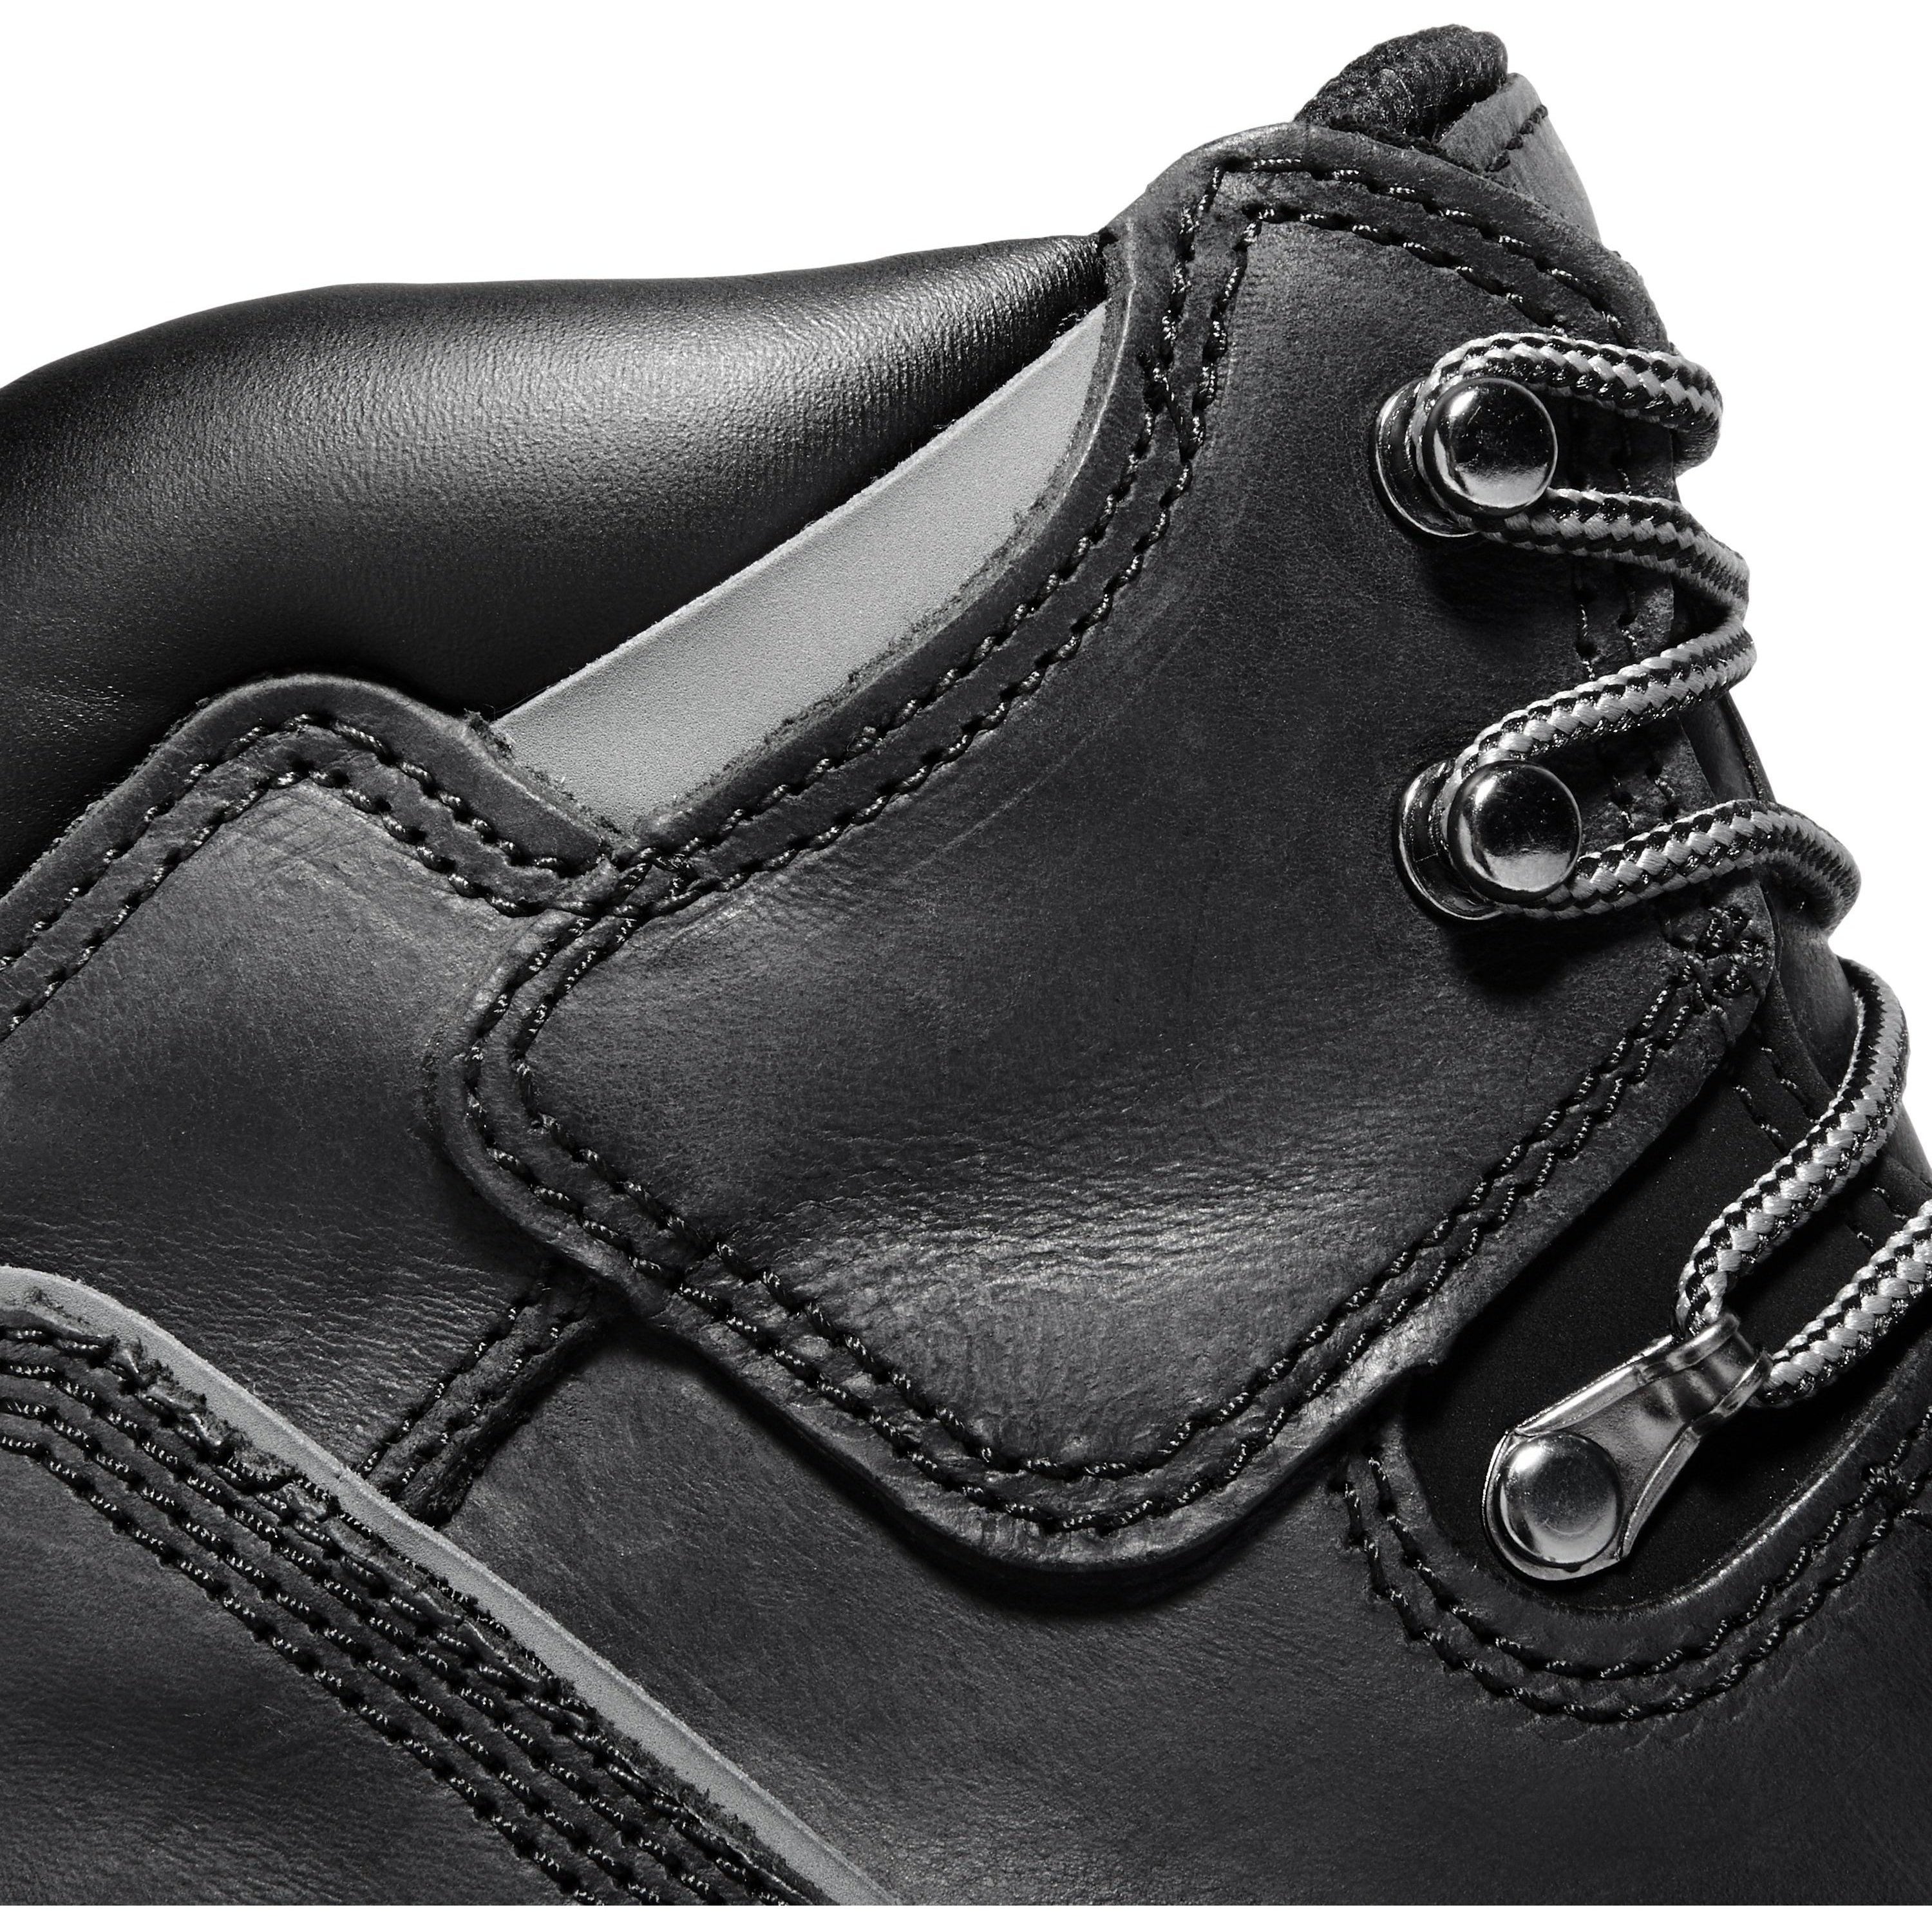 Timberland PRO Men's Pit Boss 6" Steel Toe Work Boot - TB033032001  - Overlook Boots